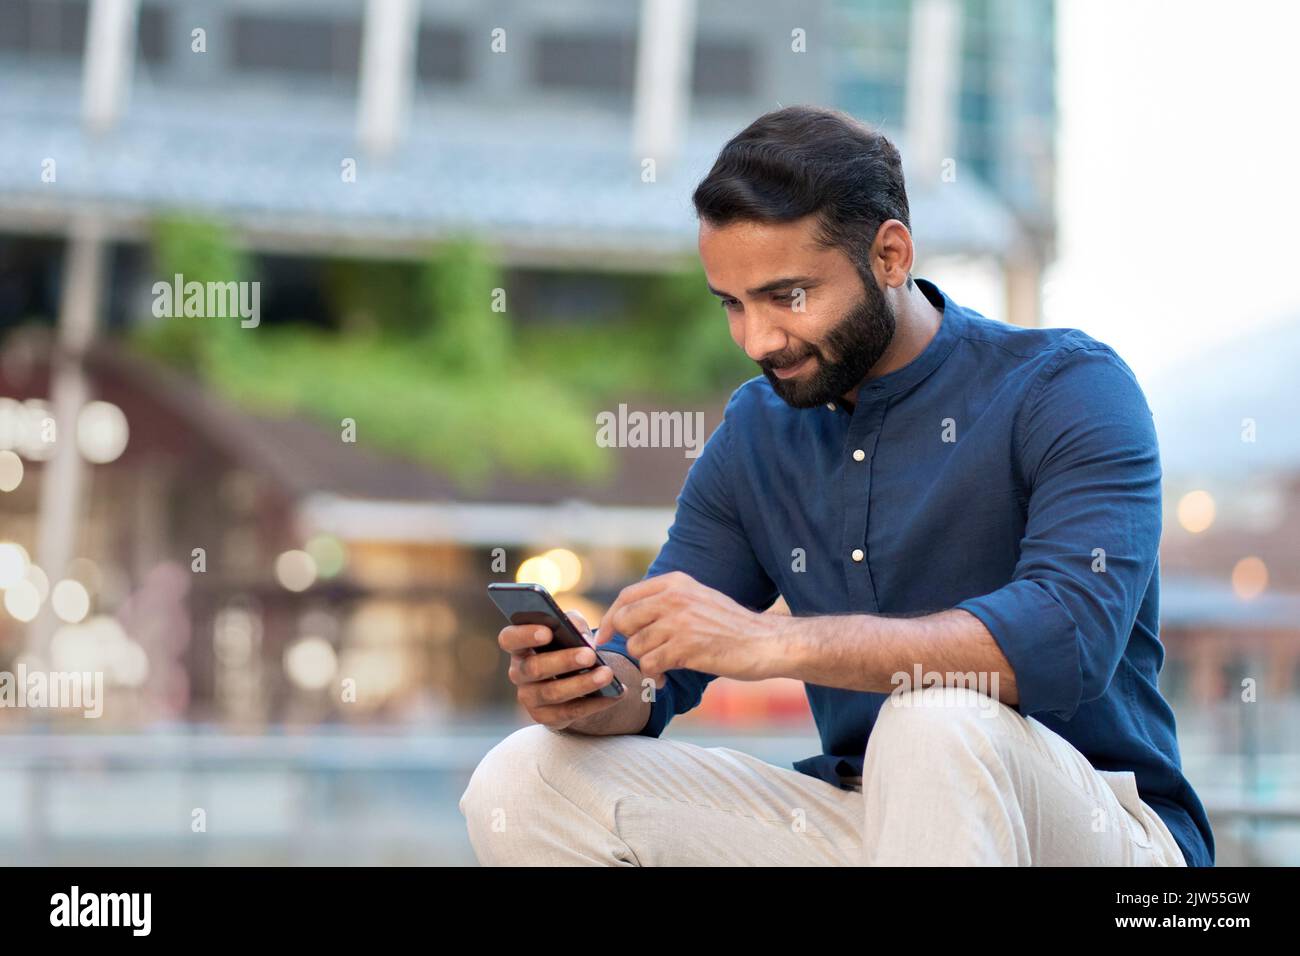 Smiling indian businessman using smartphone sitting on urban city street. Stock Photo